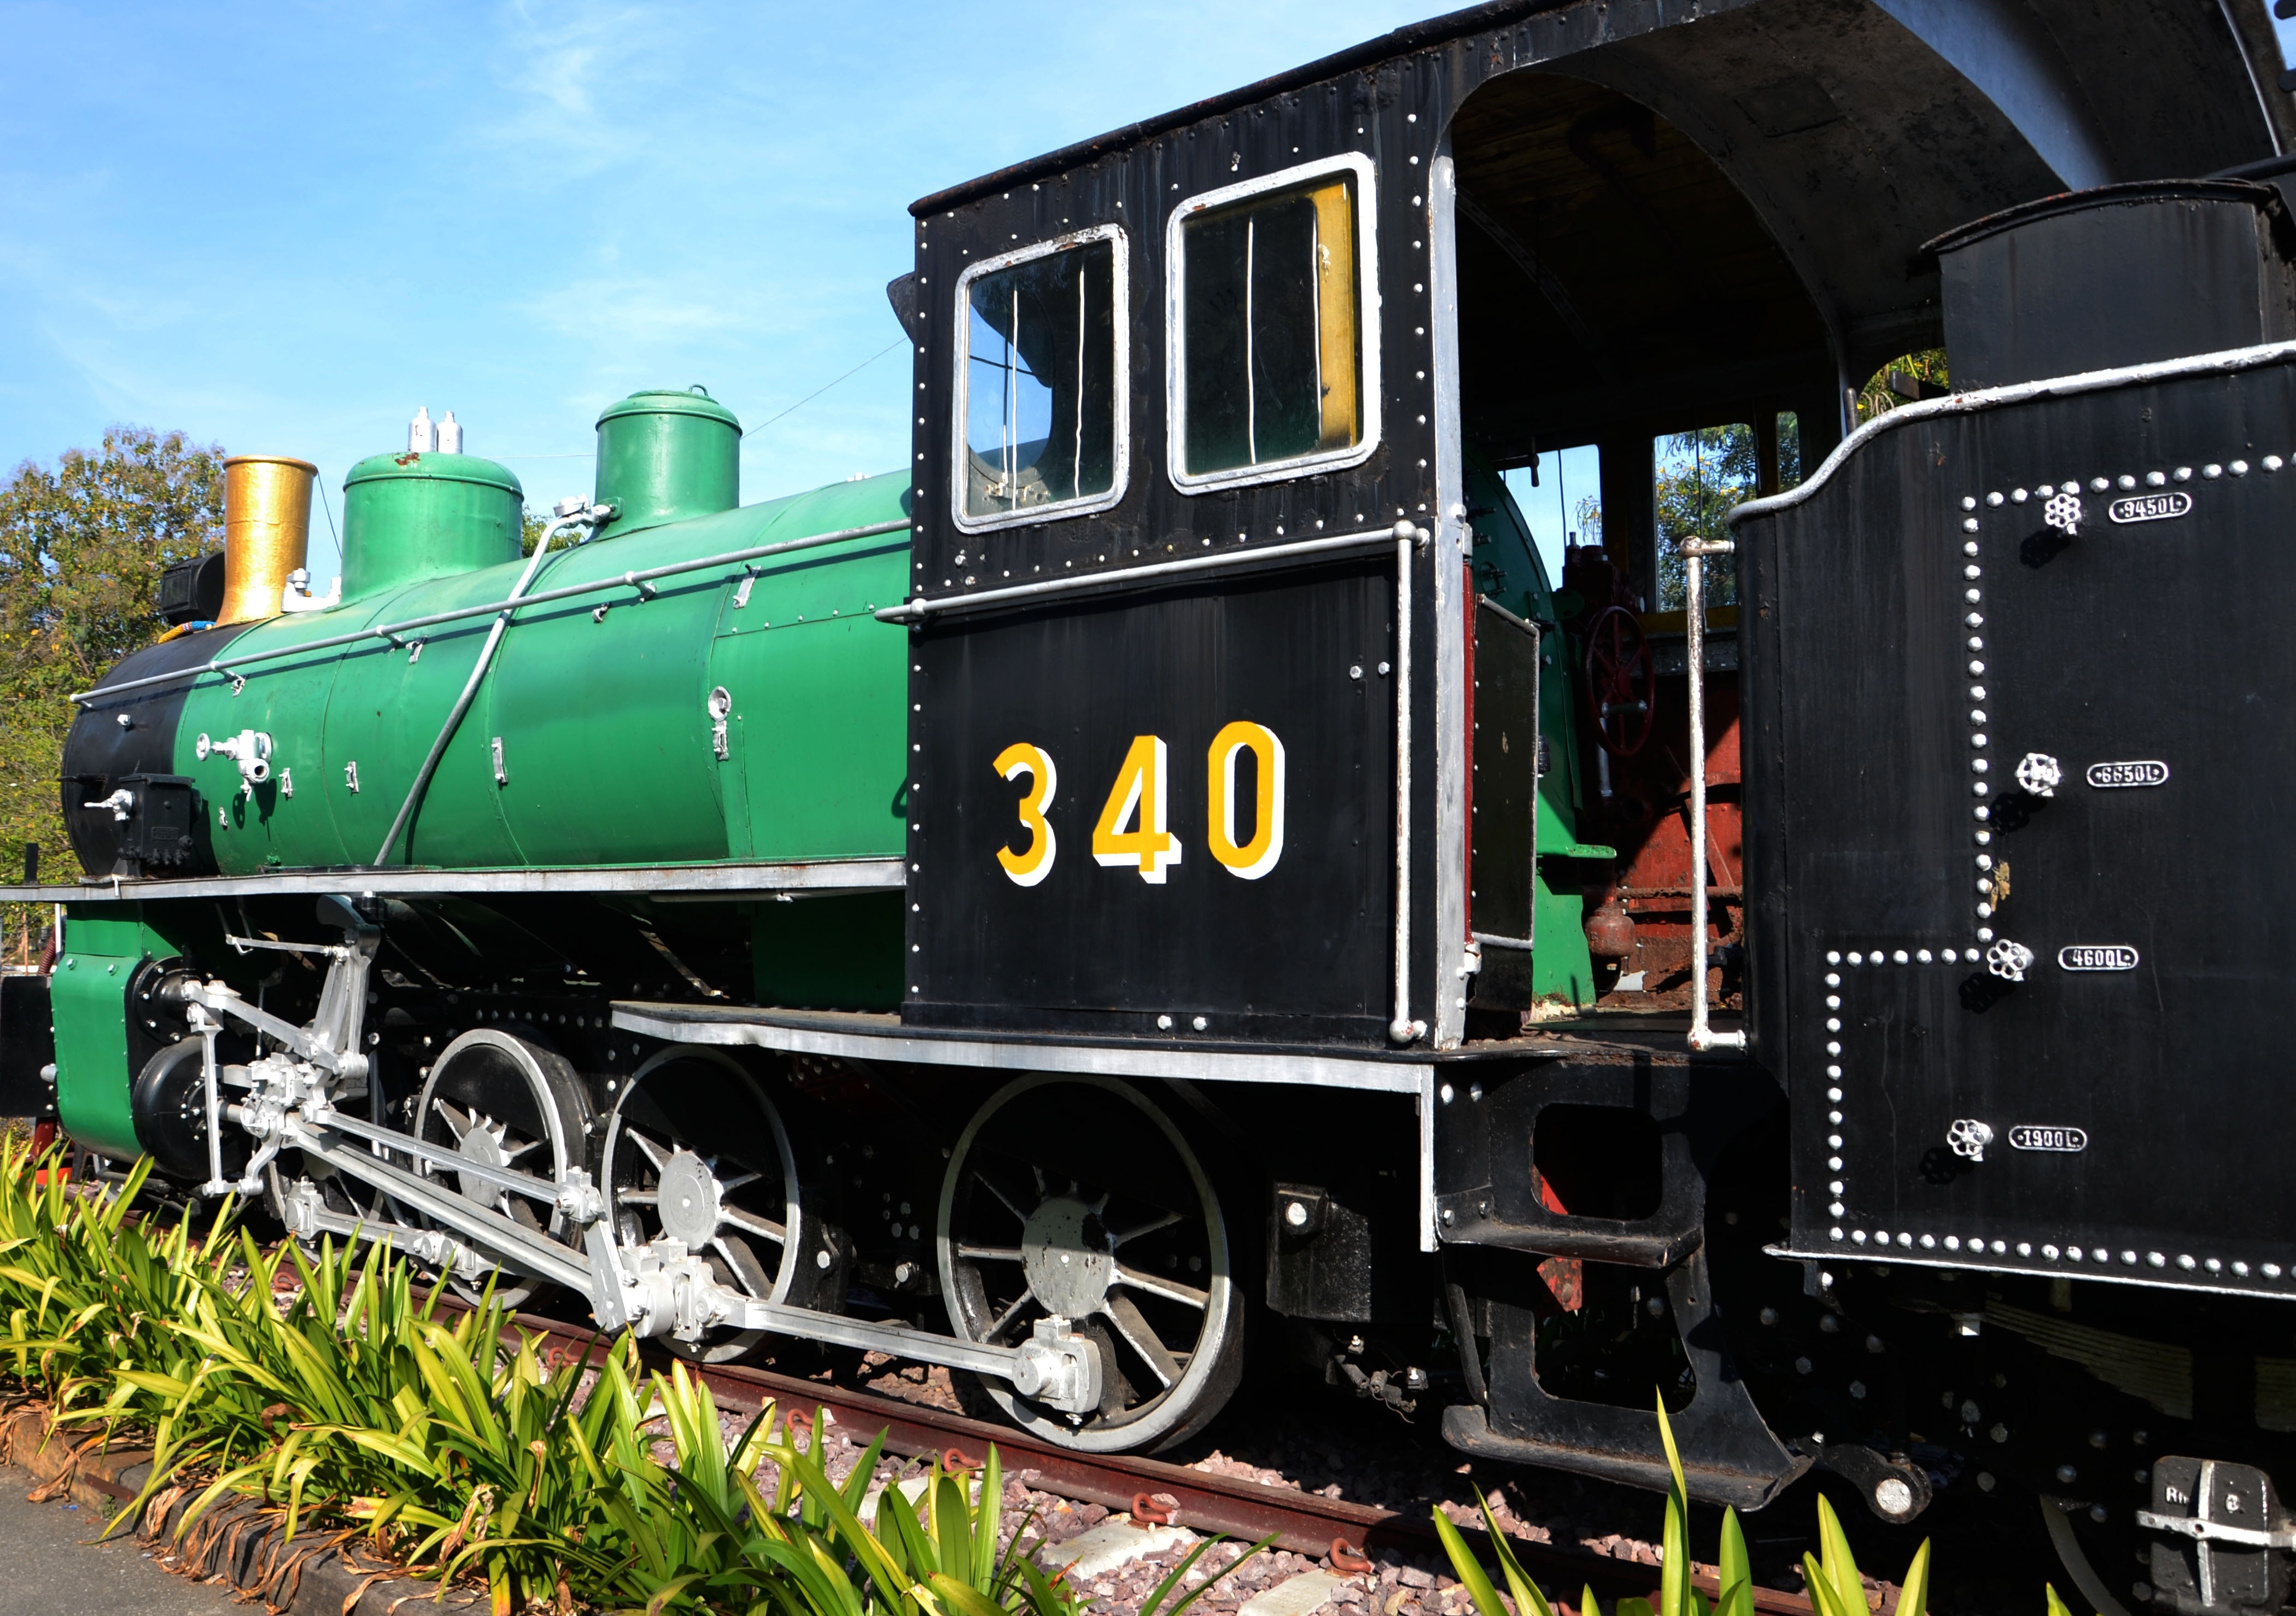 green and black train